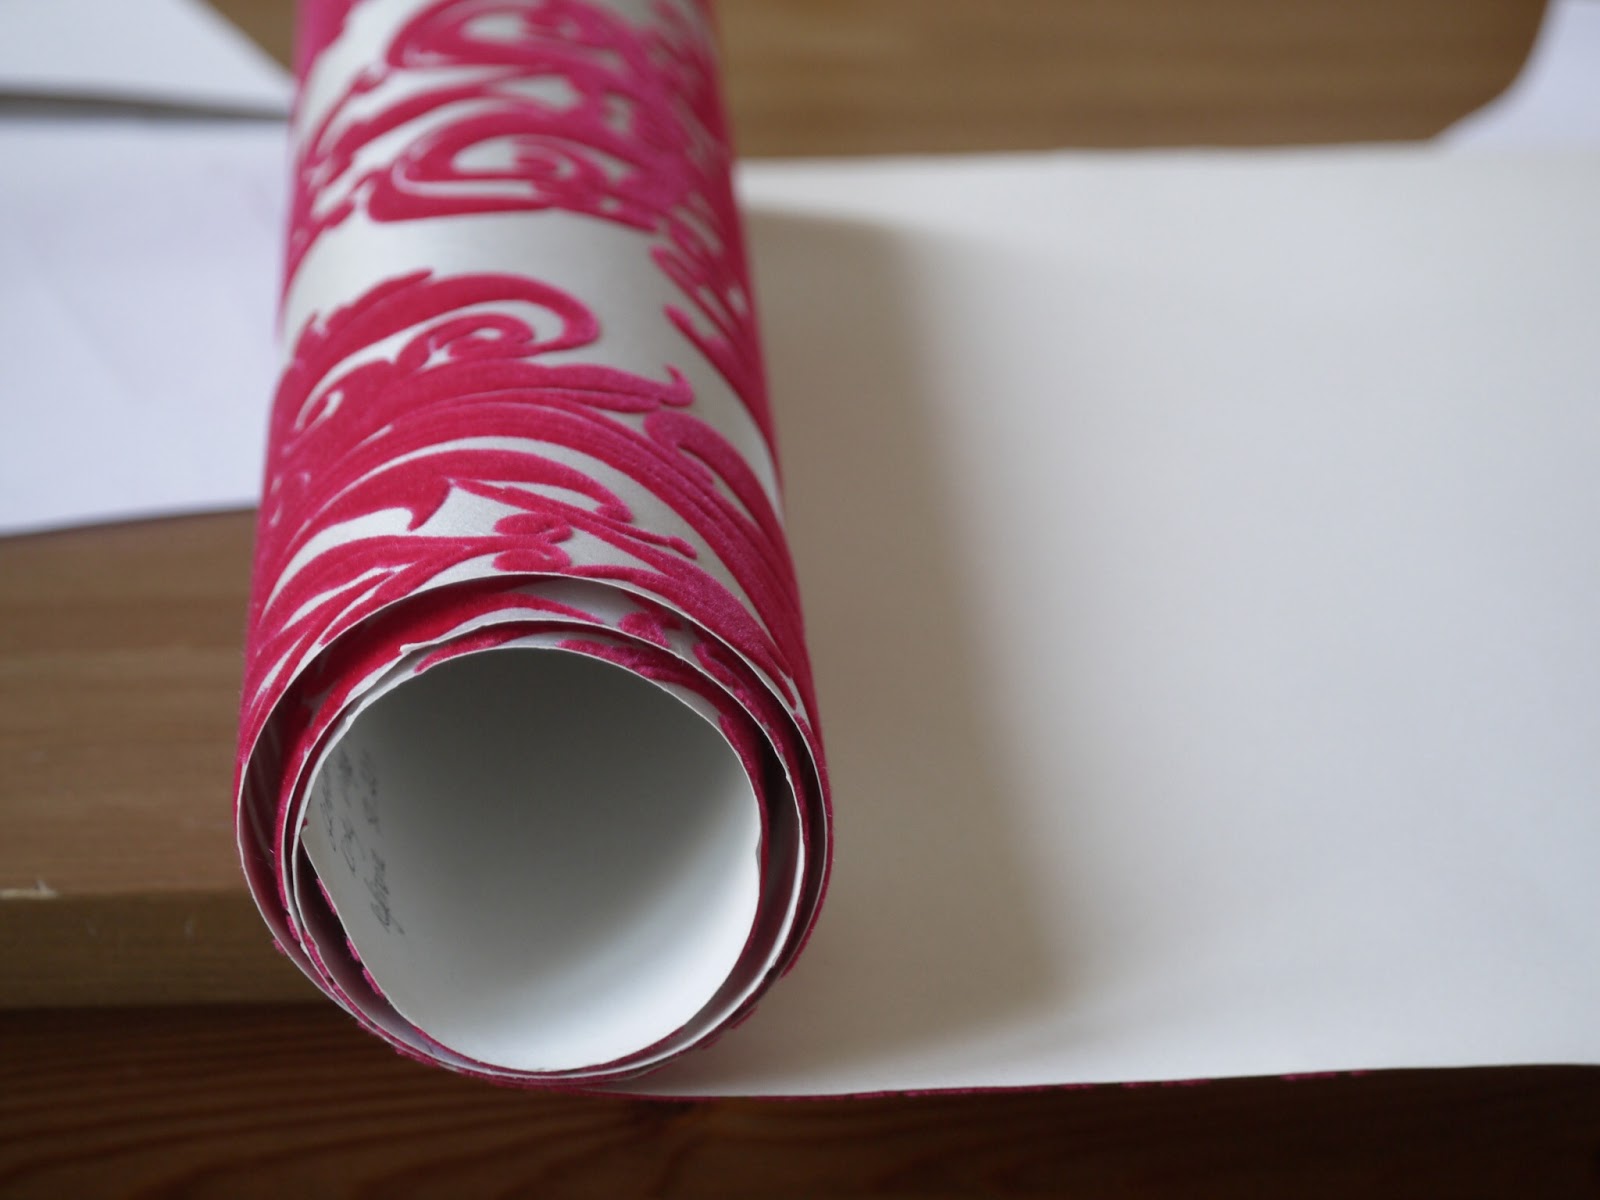 Échantillons de papier peint Home Depot - Échantillons Papier Peint